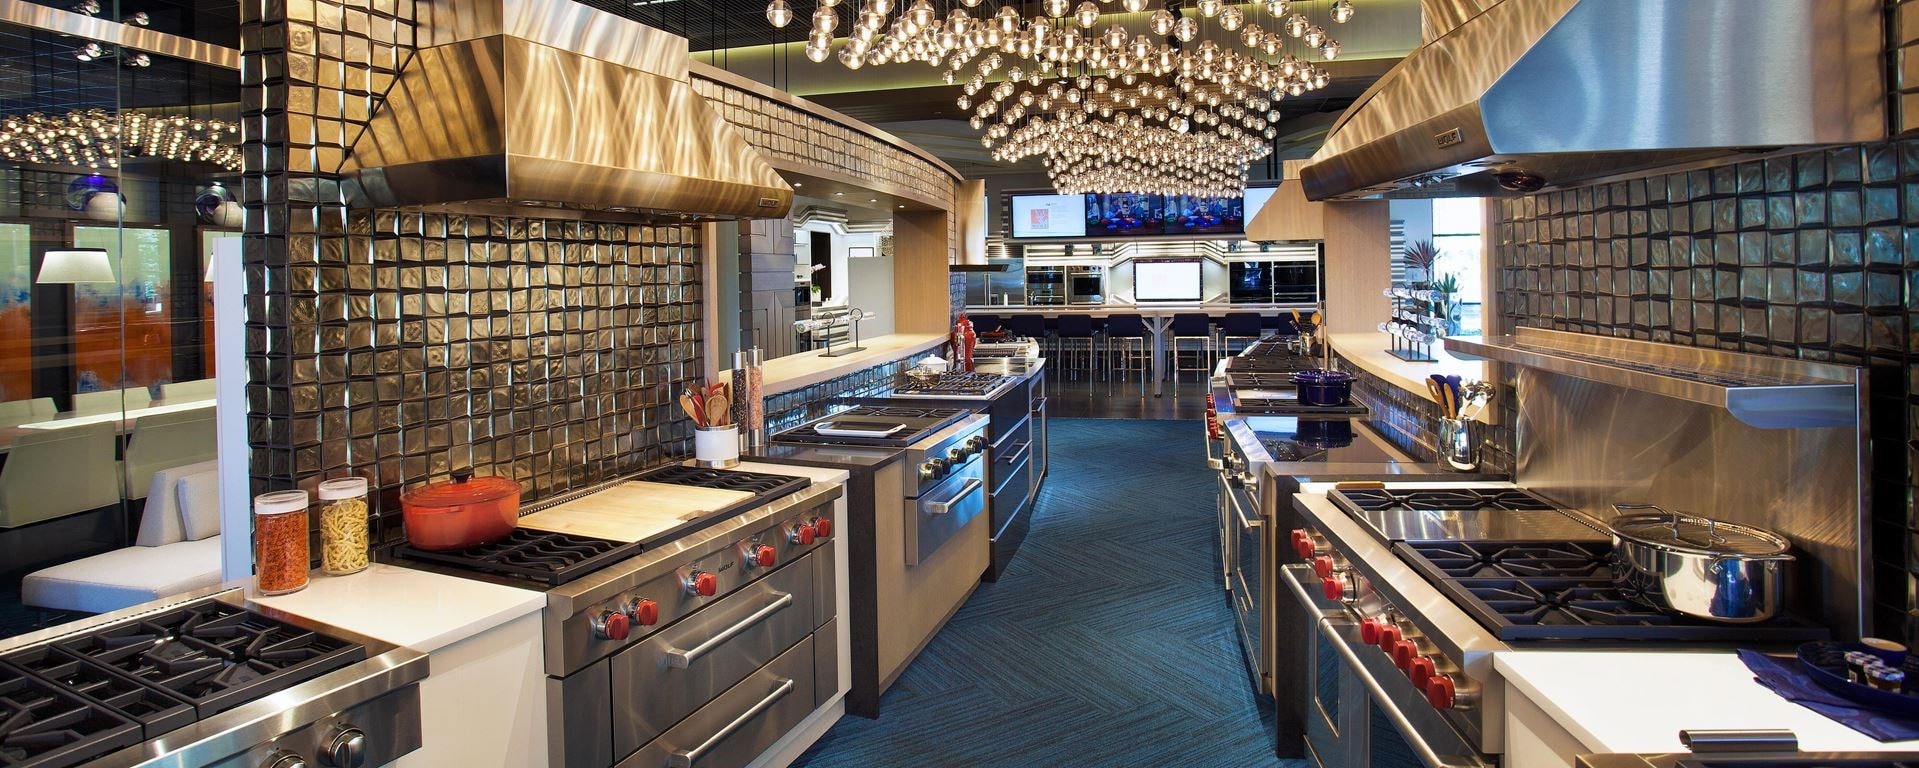 Explore luxury kitchen appliances in person at the Sub-Zero, Wolf, and Cove Showroom located in Costa Mesa, California